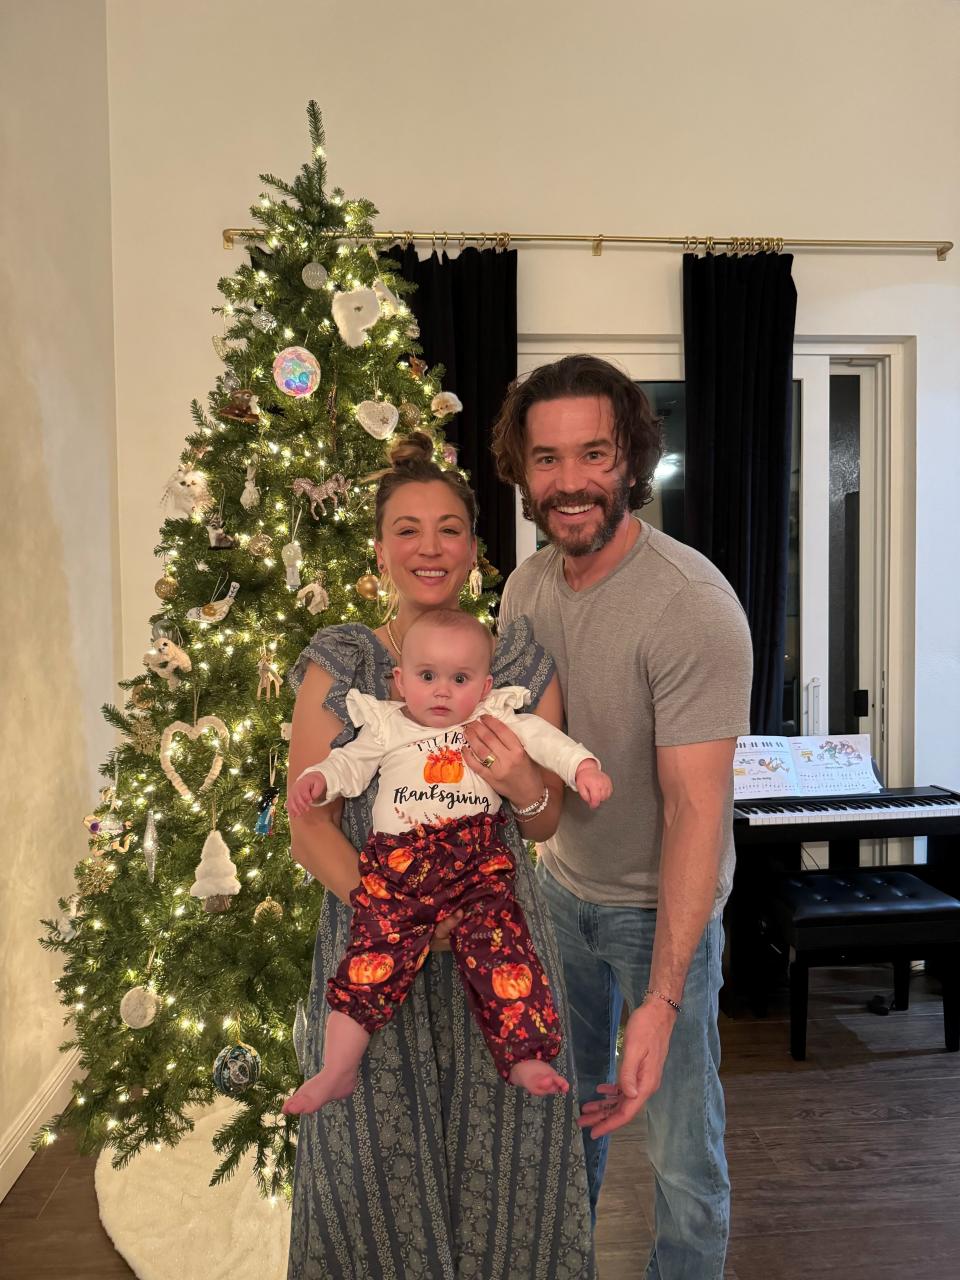 Kaley Cuoco and her partner, actor Tom Pelphrey, enjoy their daughter Matilda's first holiday season.